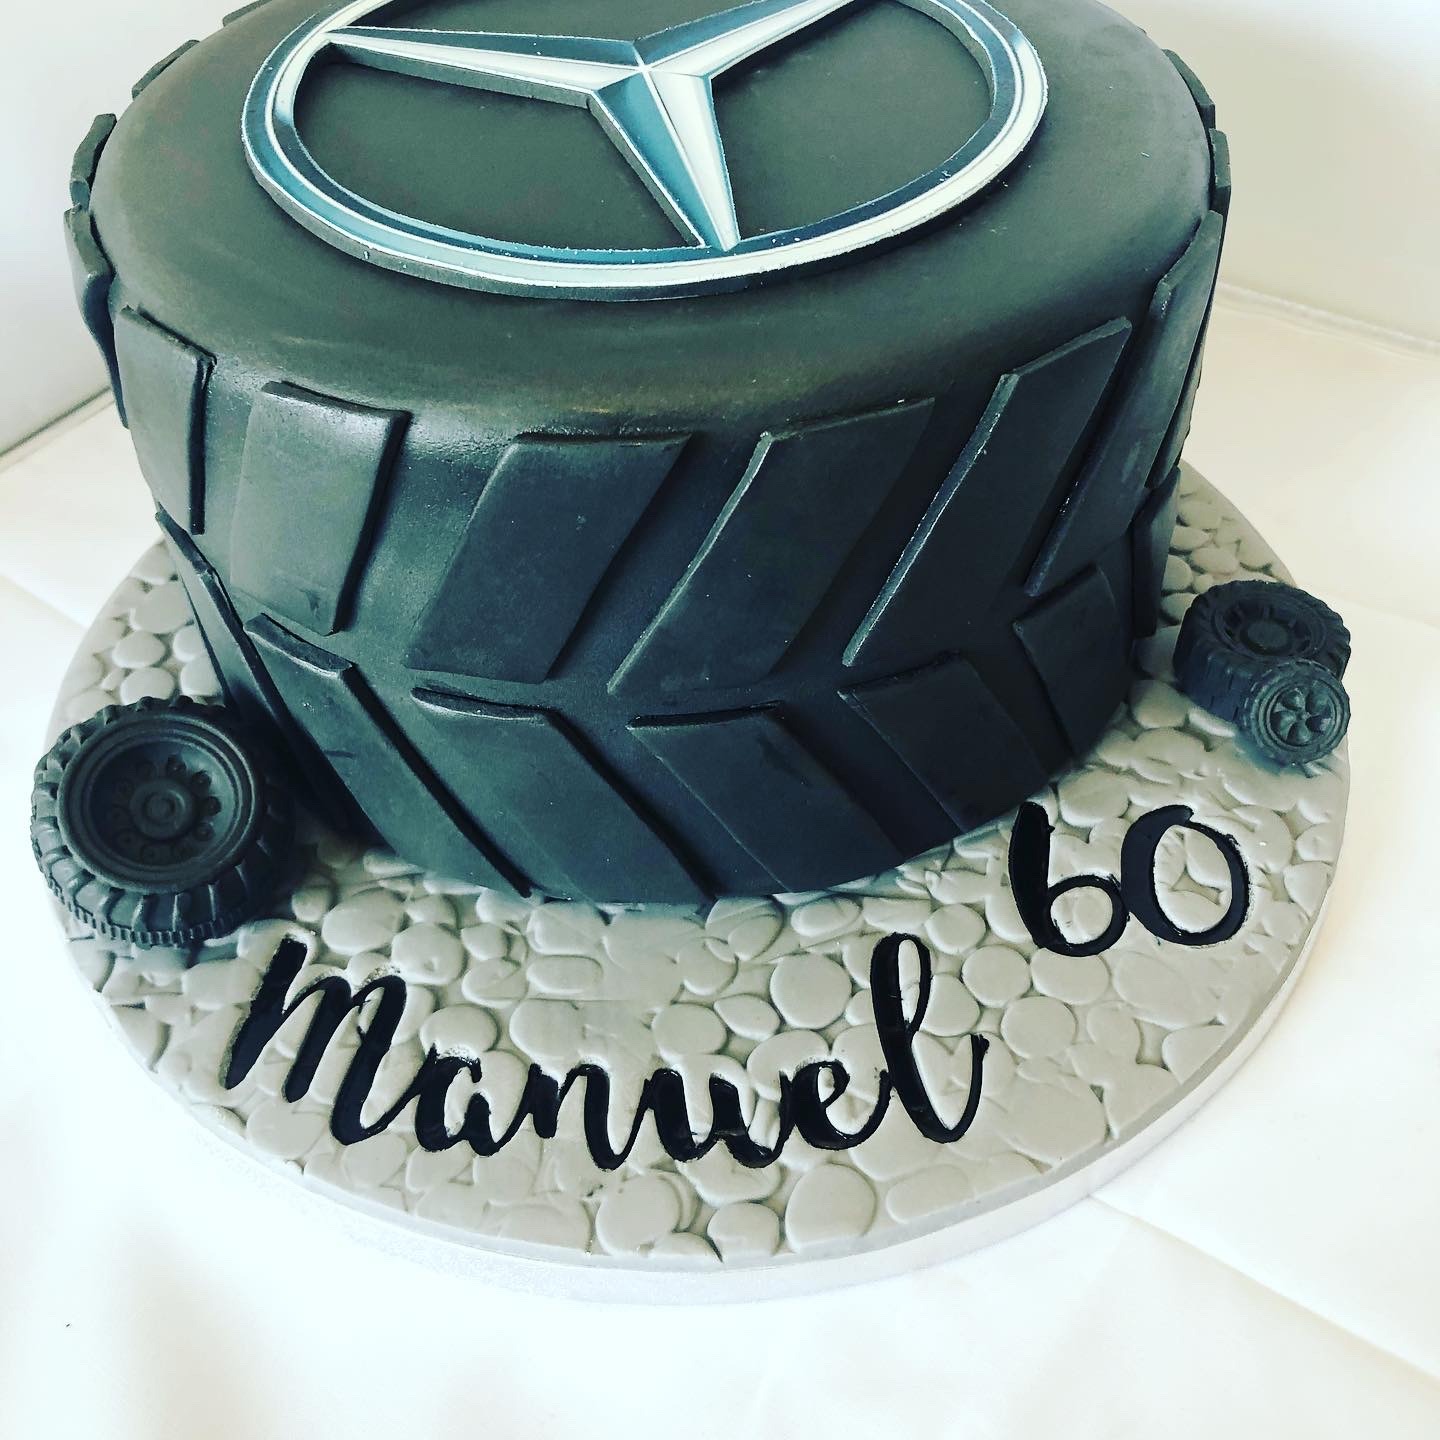 Gourmandelices de Claudia - Cake Design - 60 ans Manuel - Pneu Mercedes